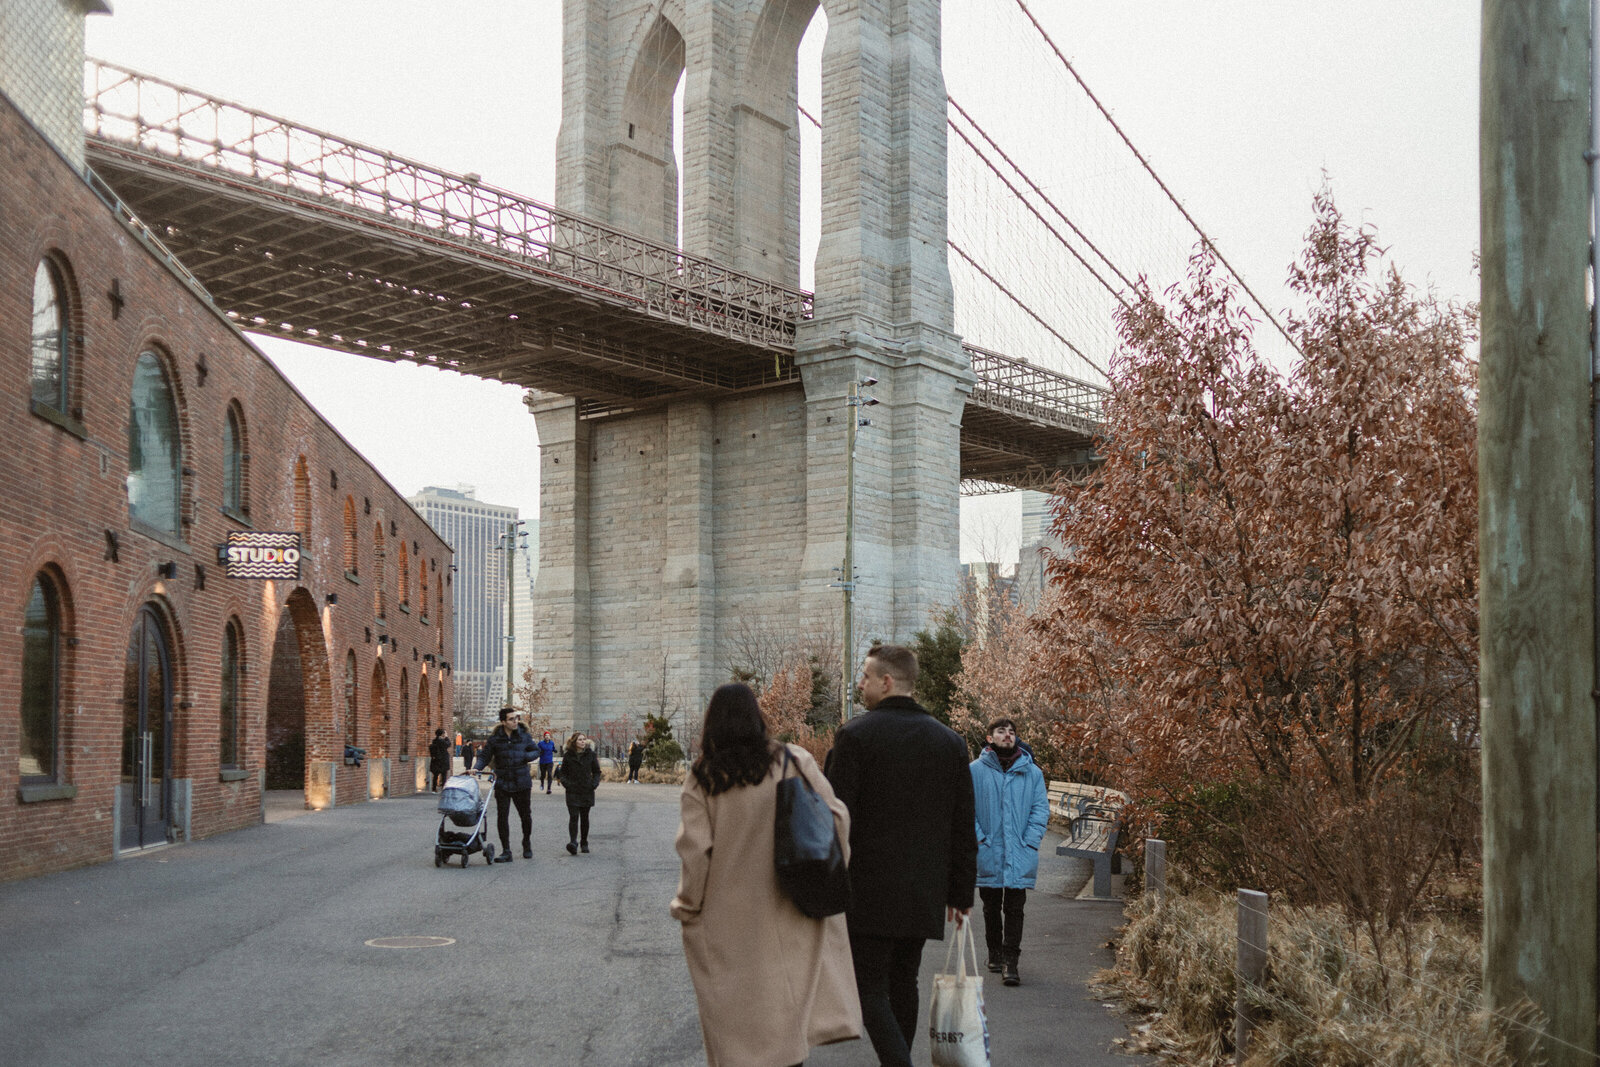 NYC Based Wedding Photographer Engagement Session at Brooklyn Bridge